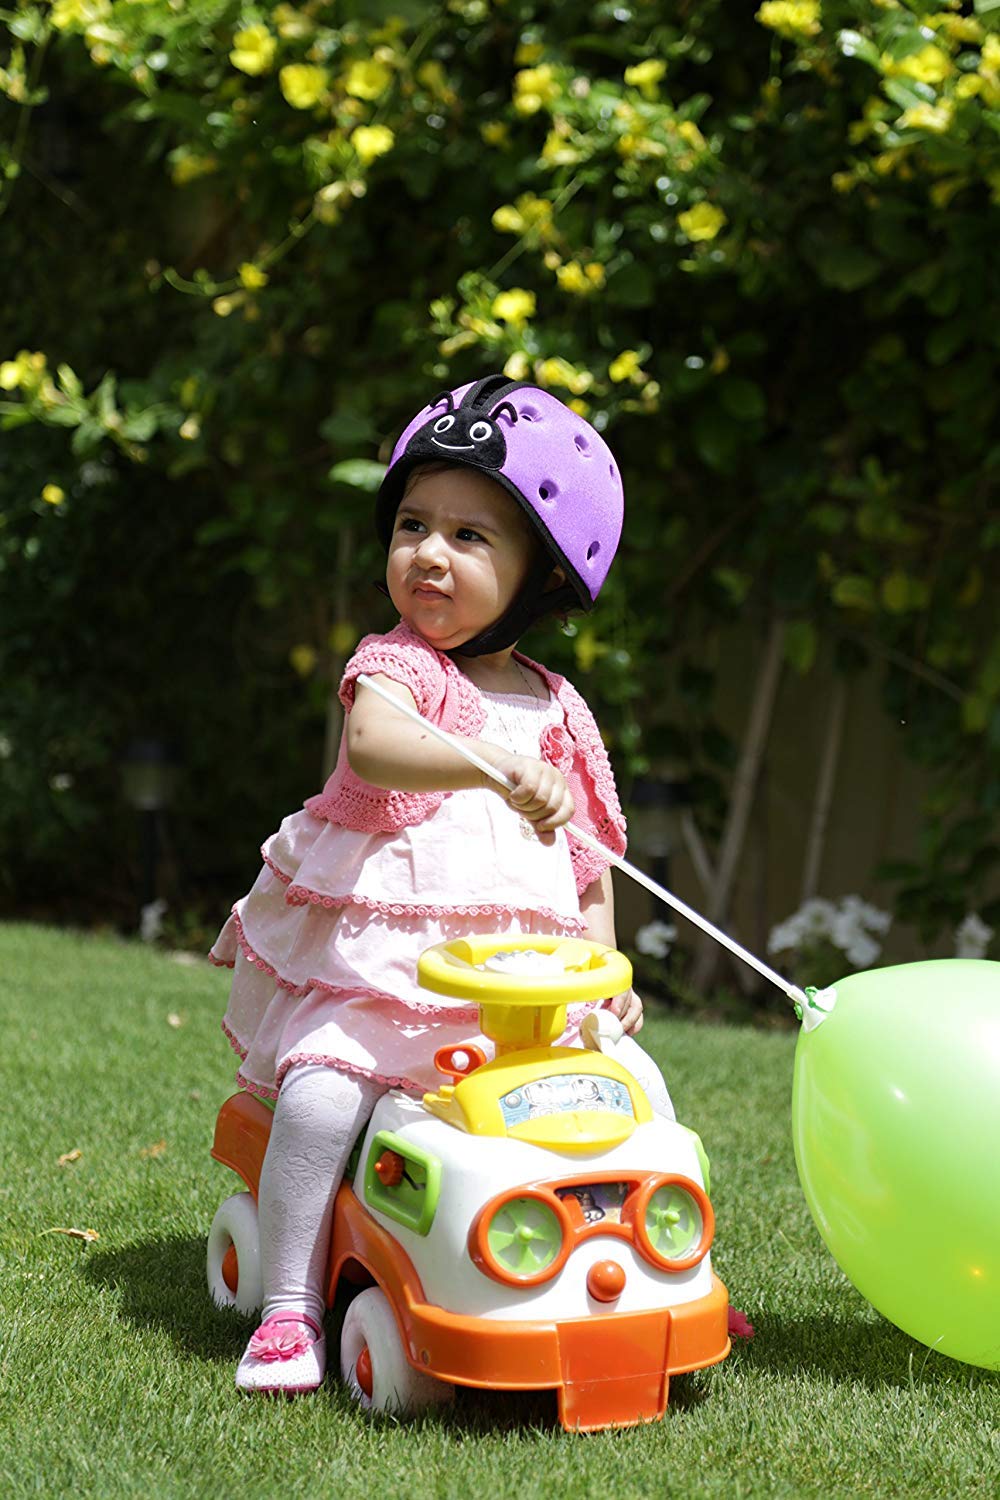 SafeheadBABY Award-Winning Infant Safety Helmet Baby Helmet for crawling Walking Ultra-Lightweight Baby Head Protector Expandabl